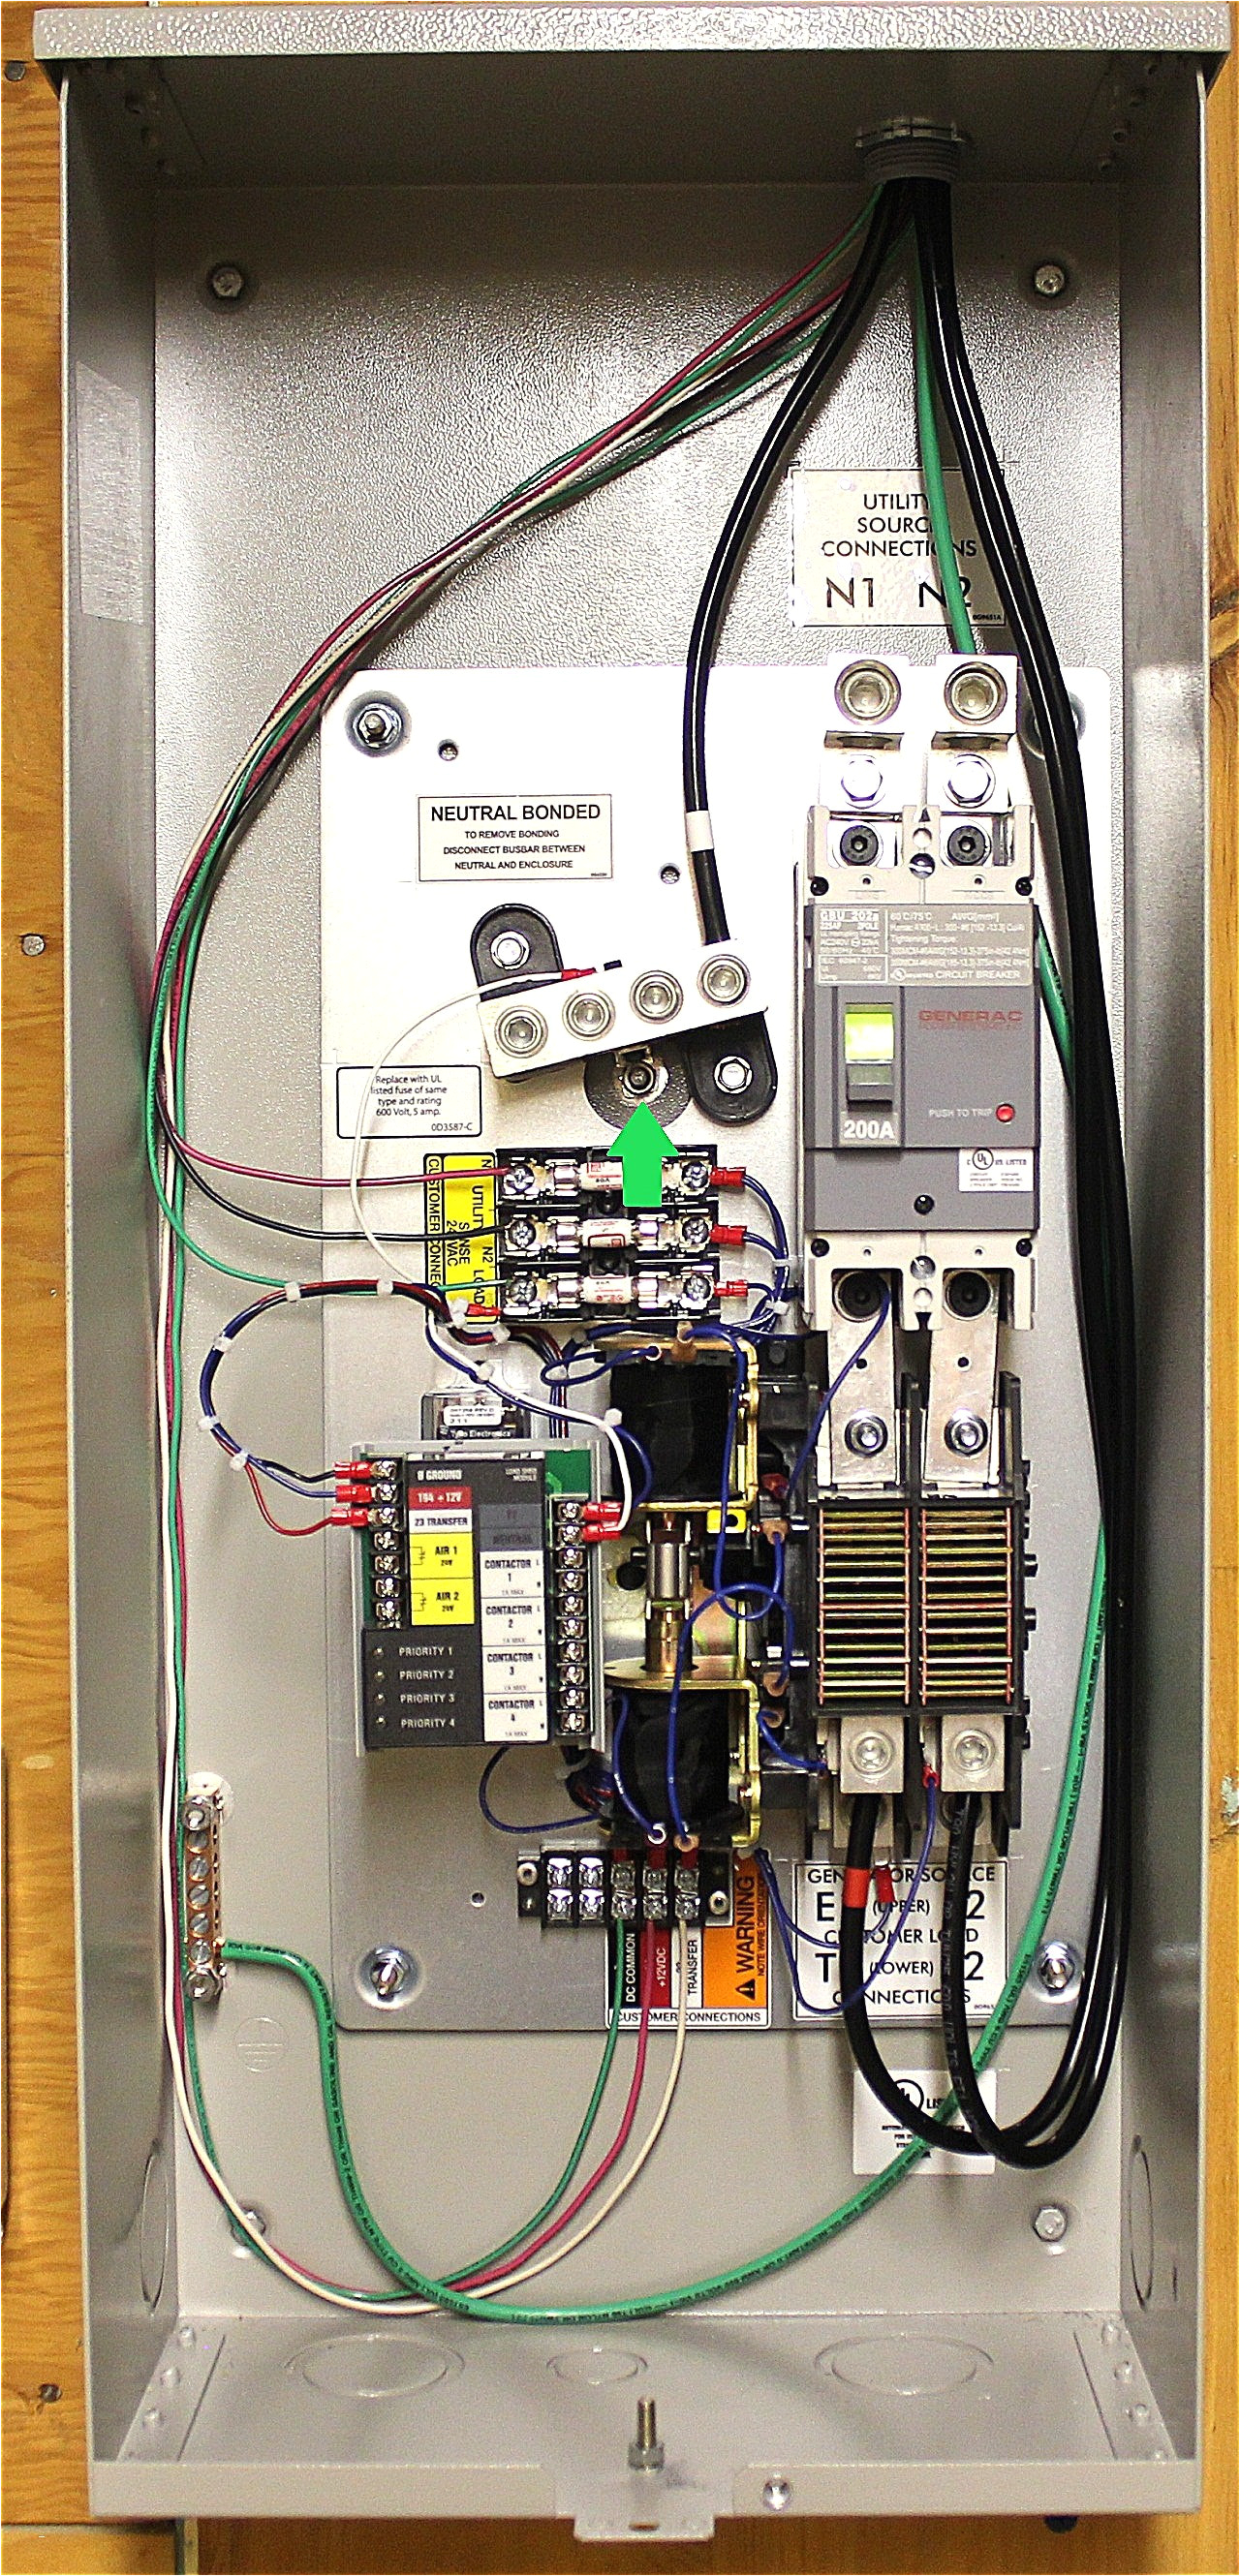 generac 100 amp automatic transfer switch wiring diagram best of generac automatic transfer switch wiring diagram